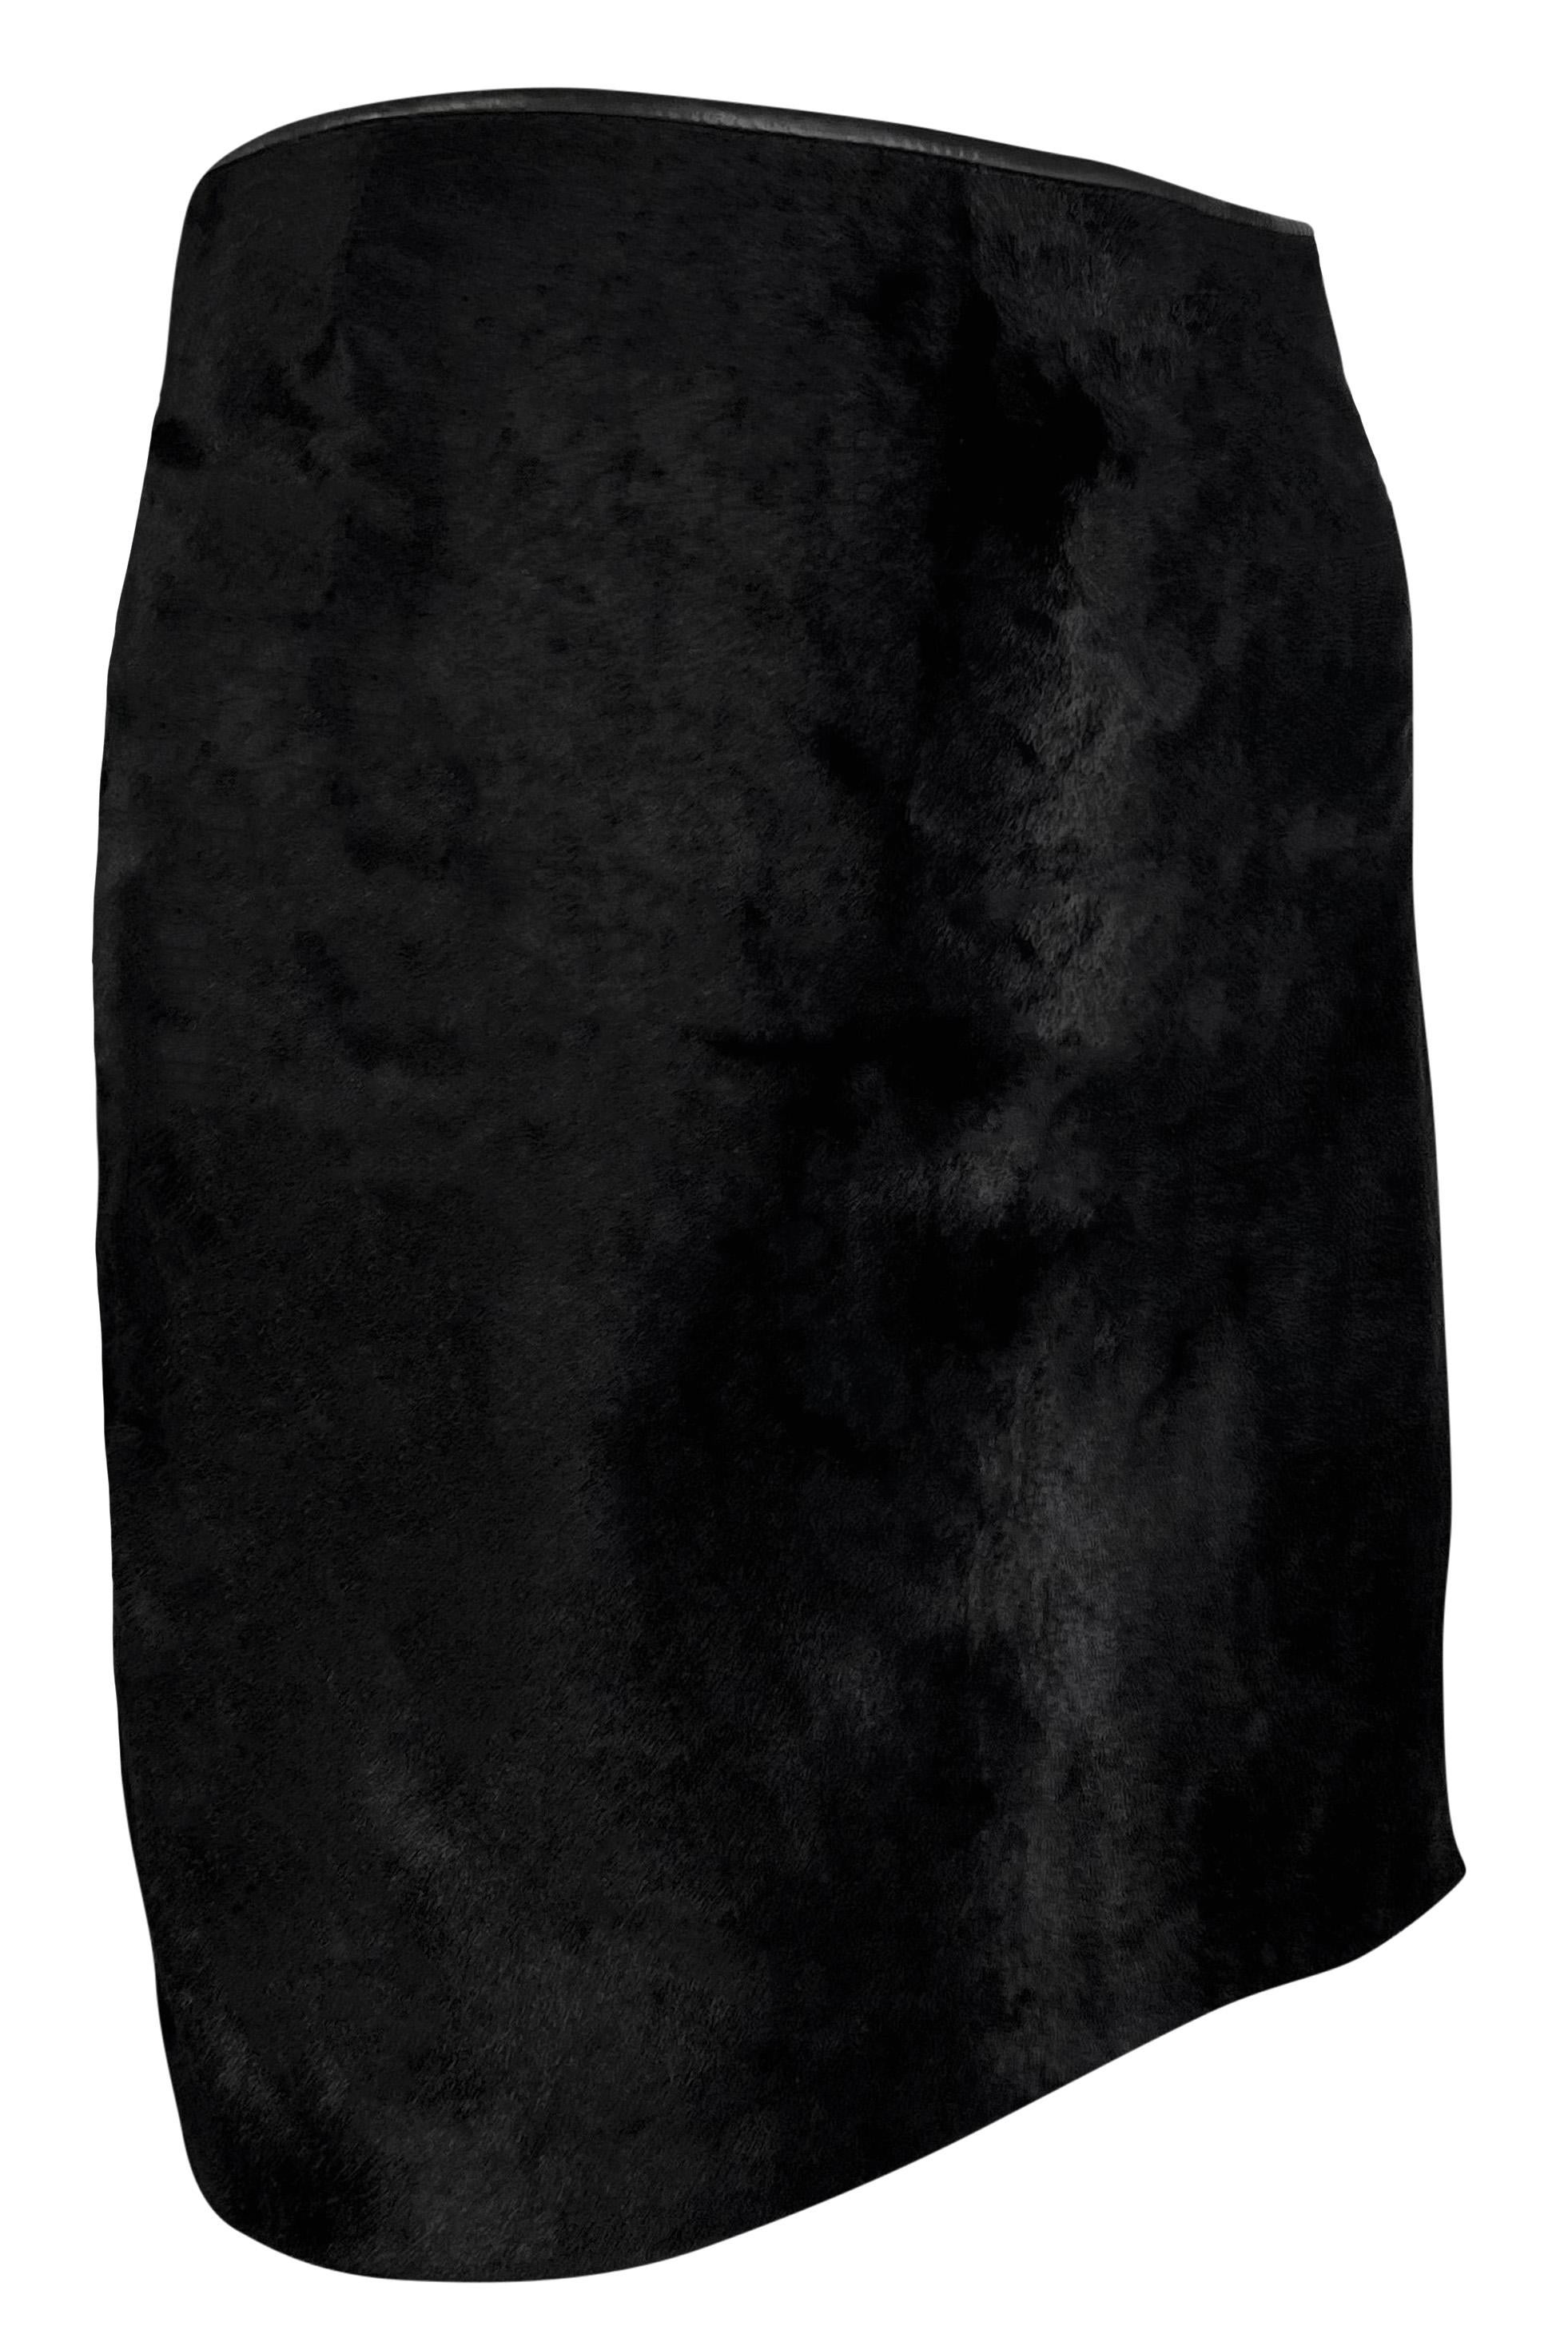 1990s Dolce & Gabbana Black Ponyhair Cowhide Leather Trim Wrap Style Mini Skirt For Sale 1